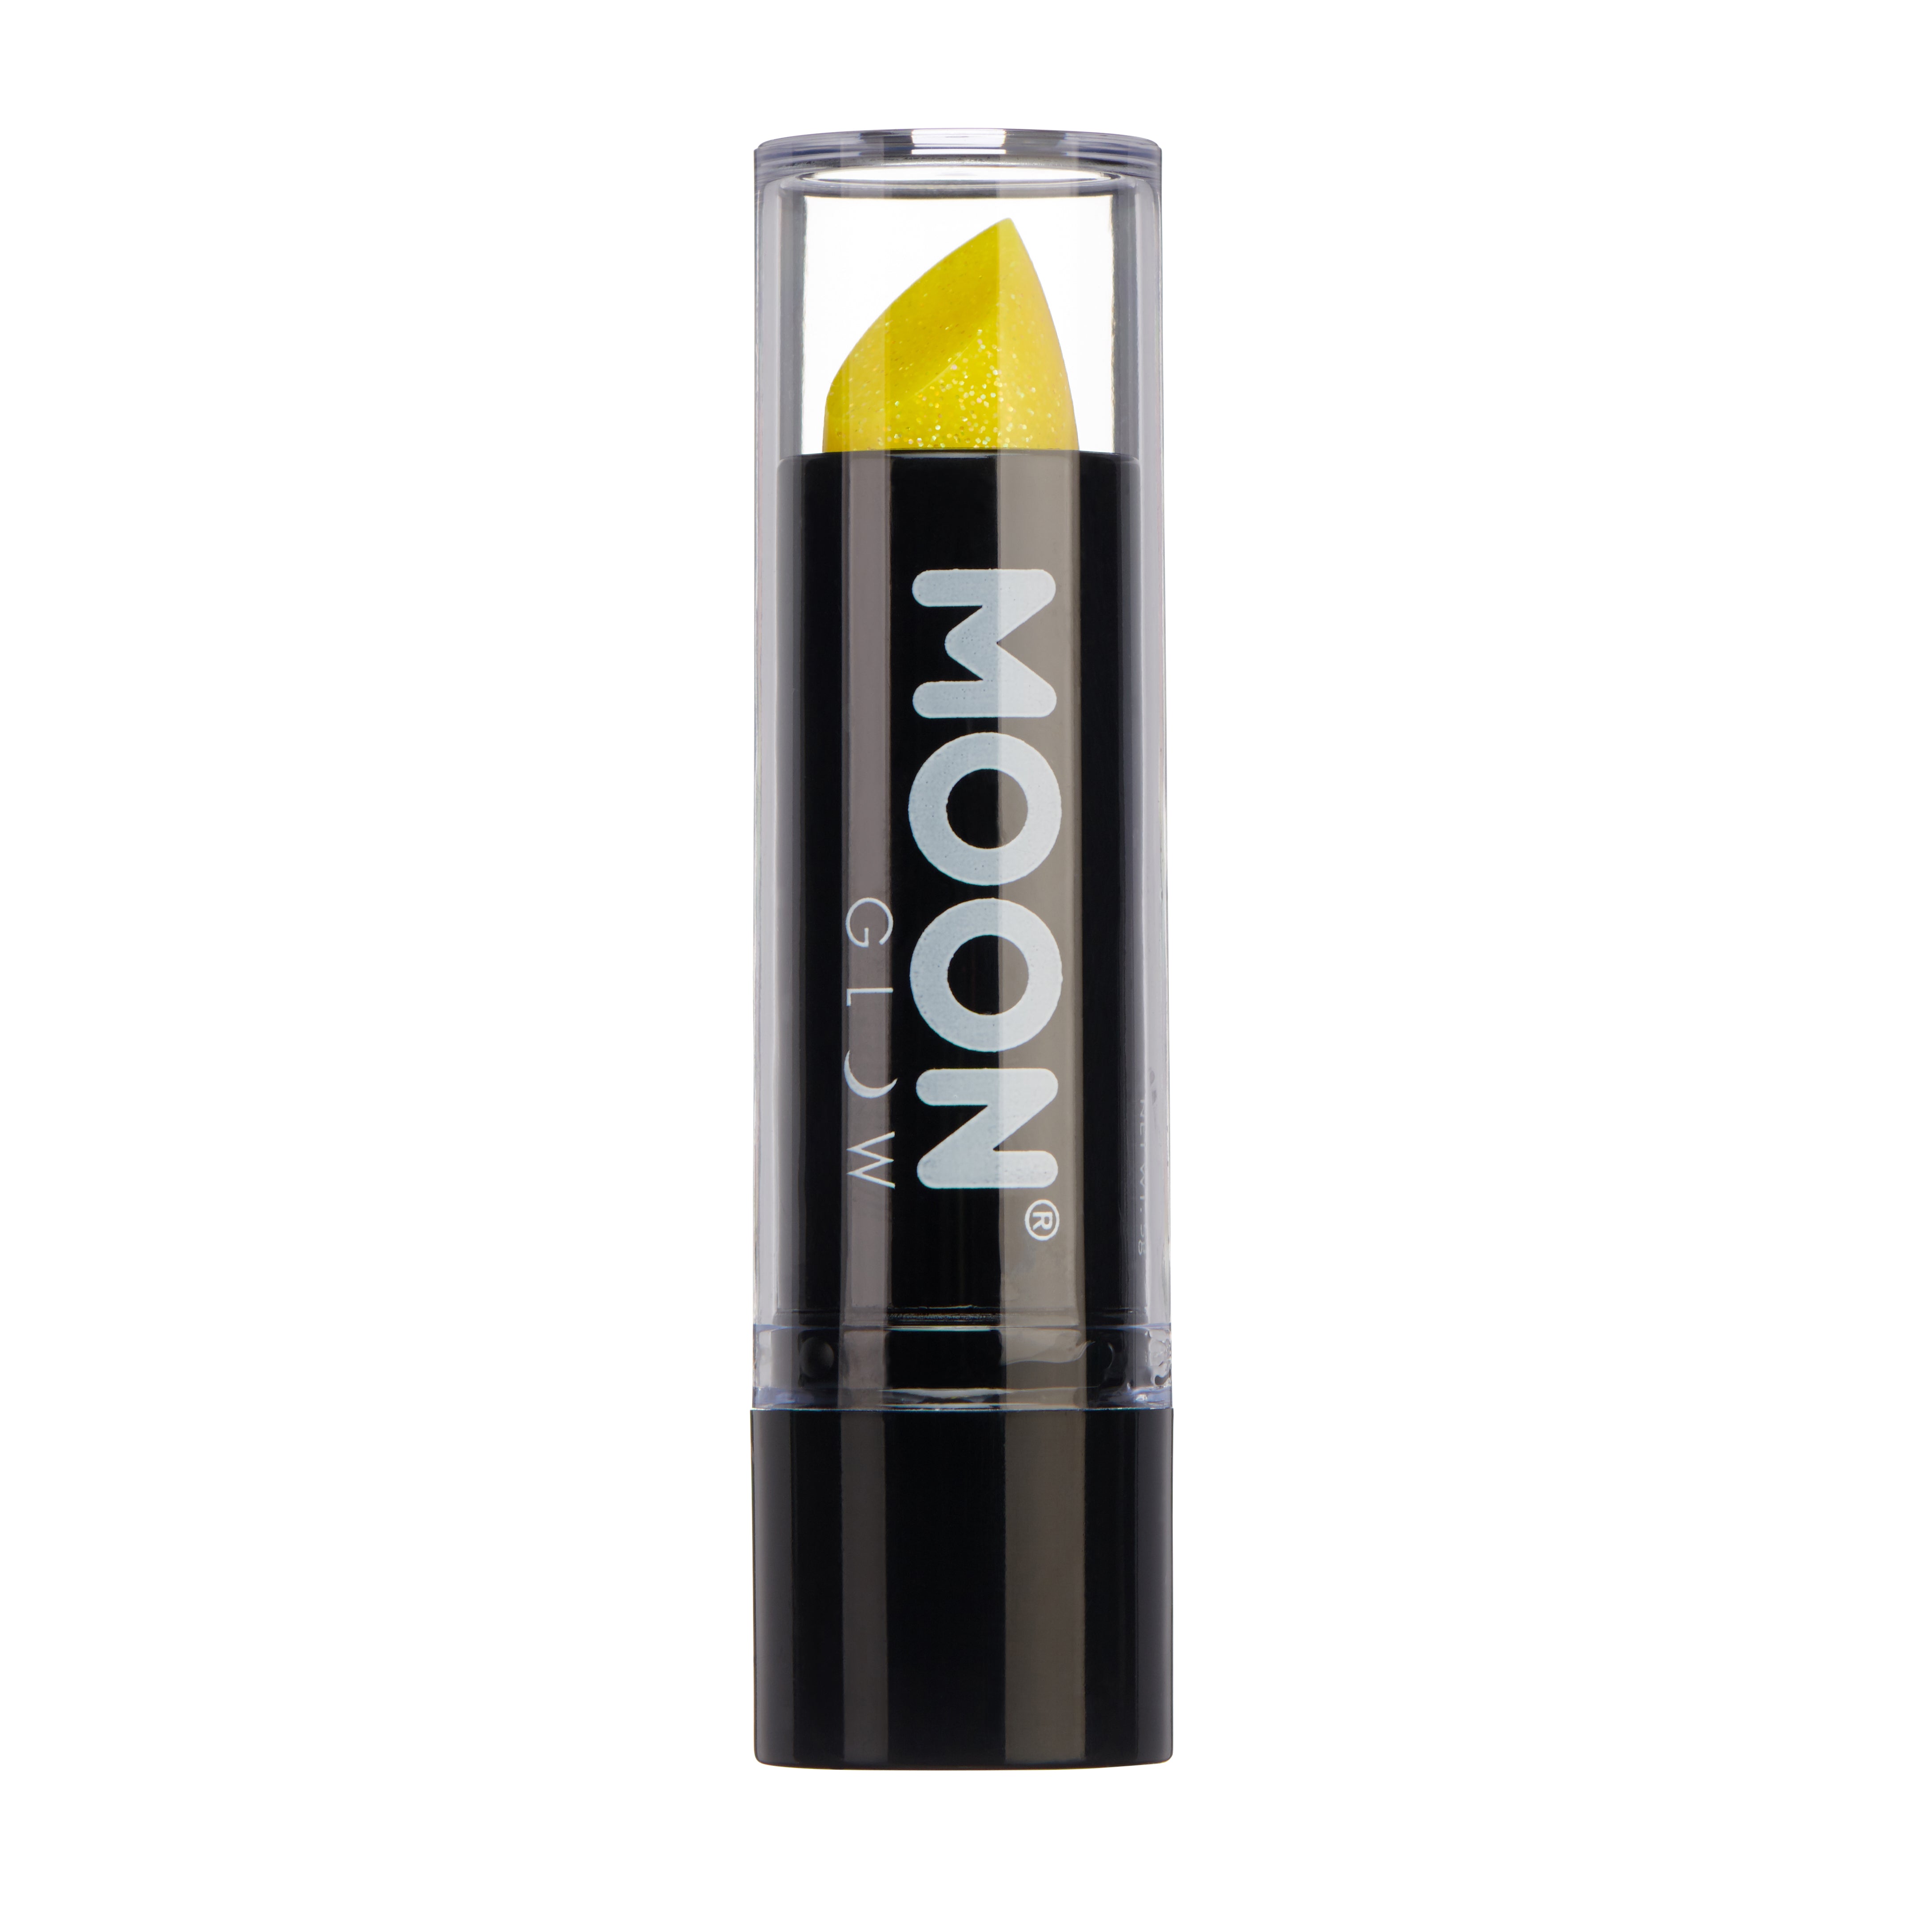 Yellow - UV Glitter Lipstick, 5g. Cosmetically certified, FDA & Health Canada compliant and cruelty free.